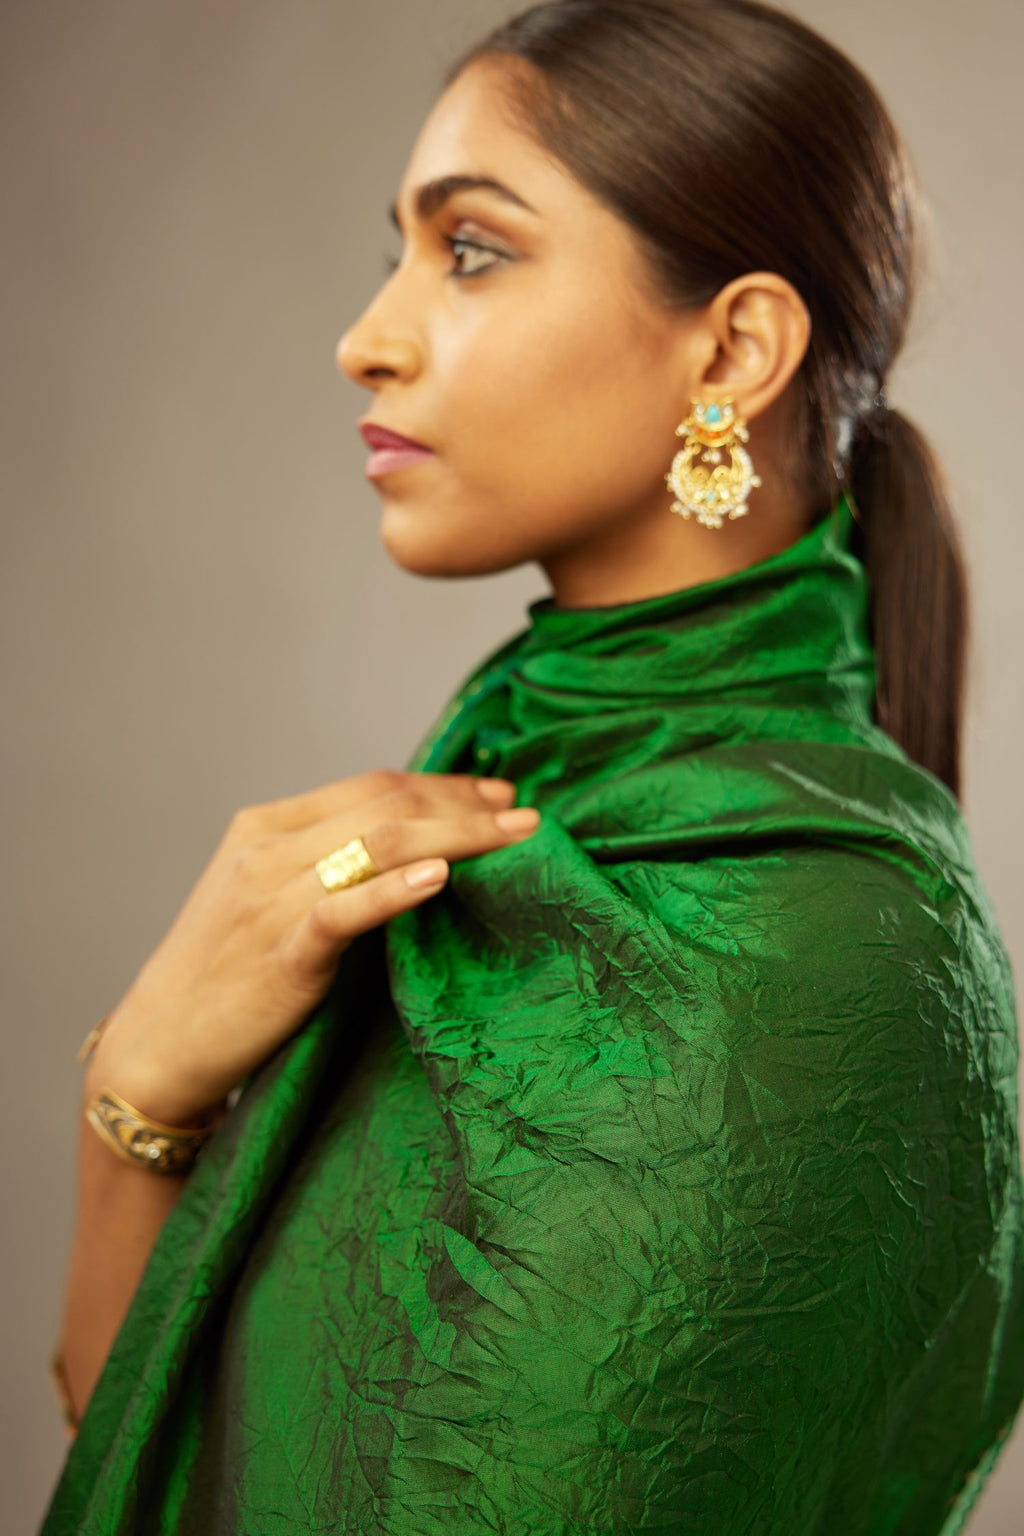 Green digital printed dori embroidered fine silk straight kurta set, highlighted with gold sequin handwork.